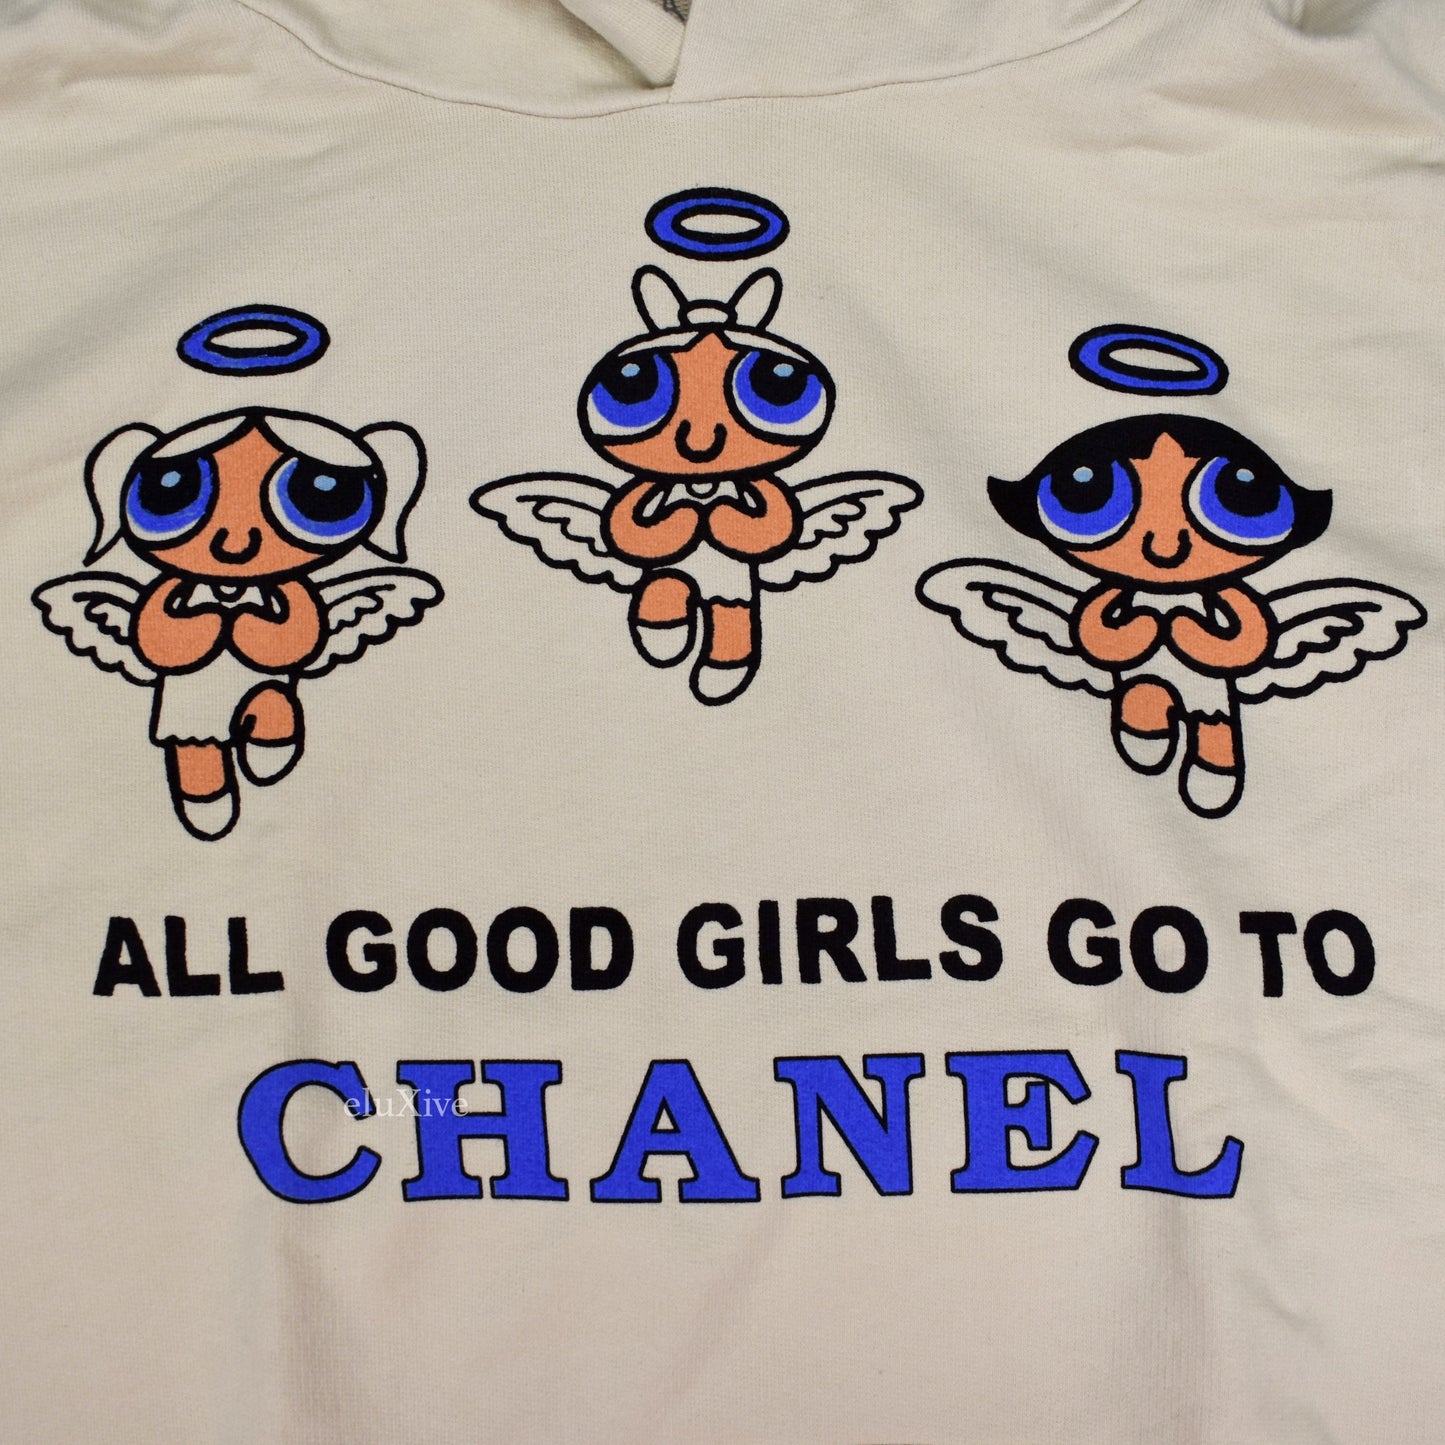 Mega Yacht - Good Girls 'Chanel/Gucci' Logo Hoodie (Beige)